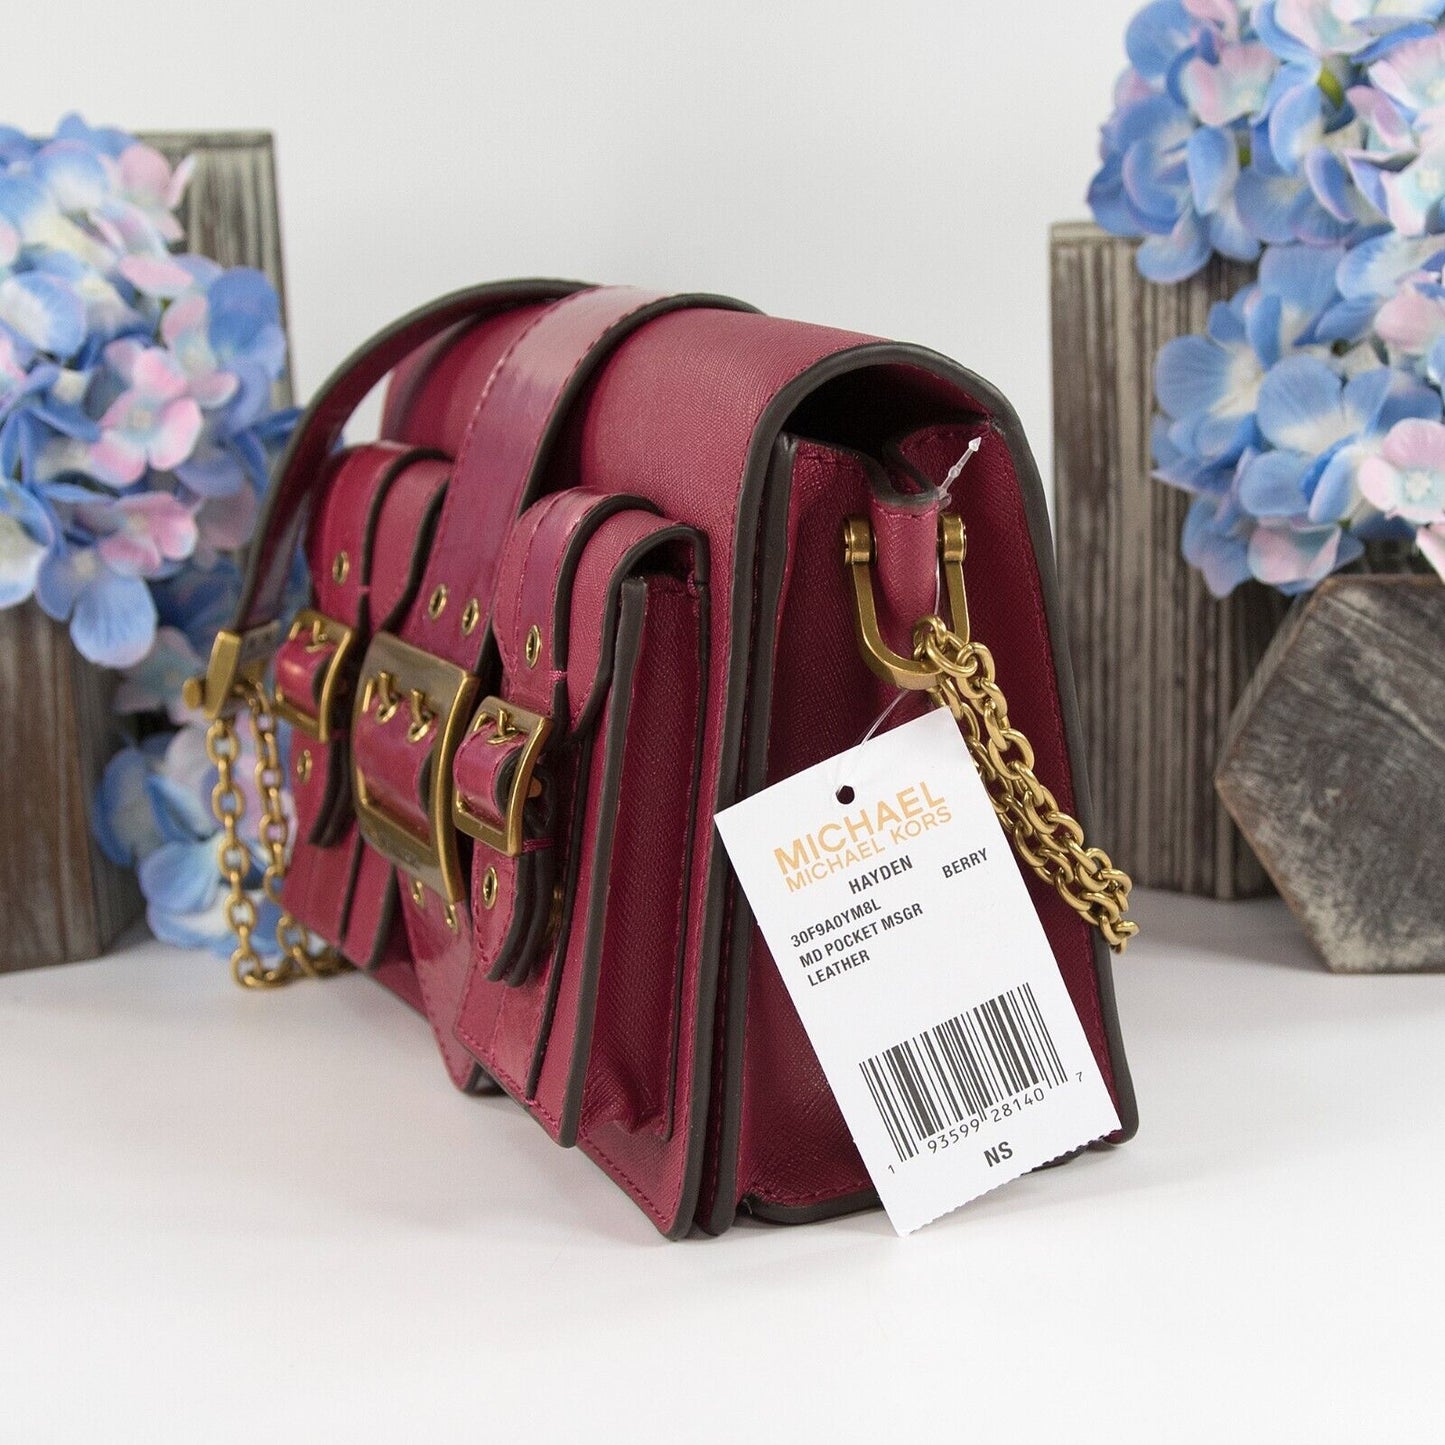 Michael Kors Berry Glazed Leather Hayden Medium Messenger Bag NWT